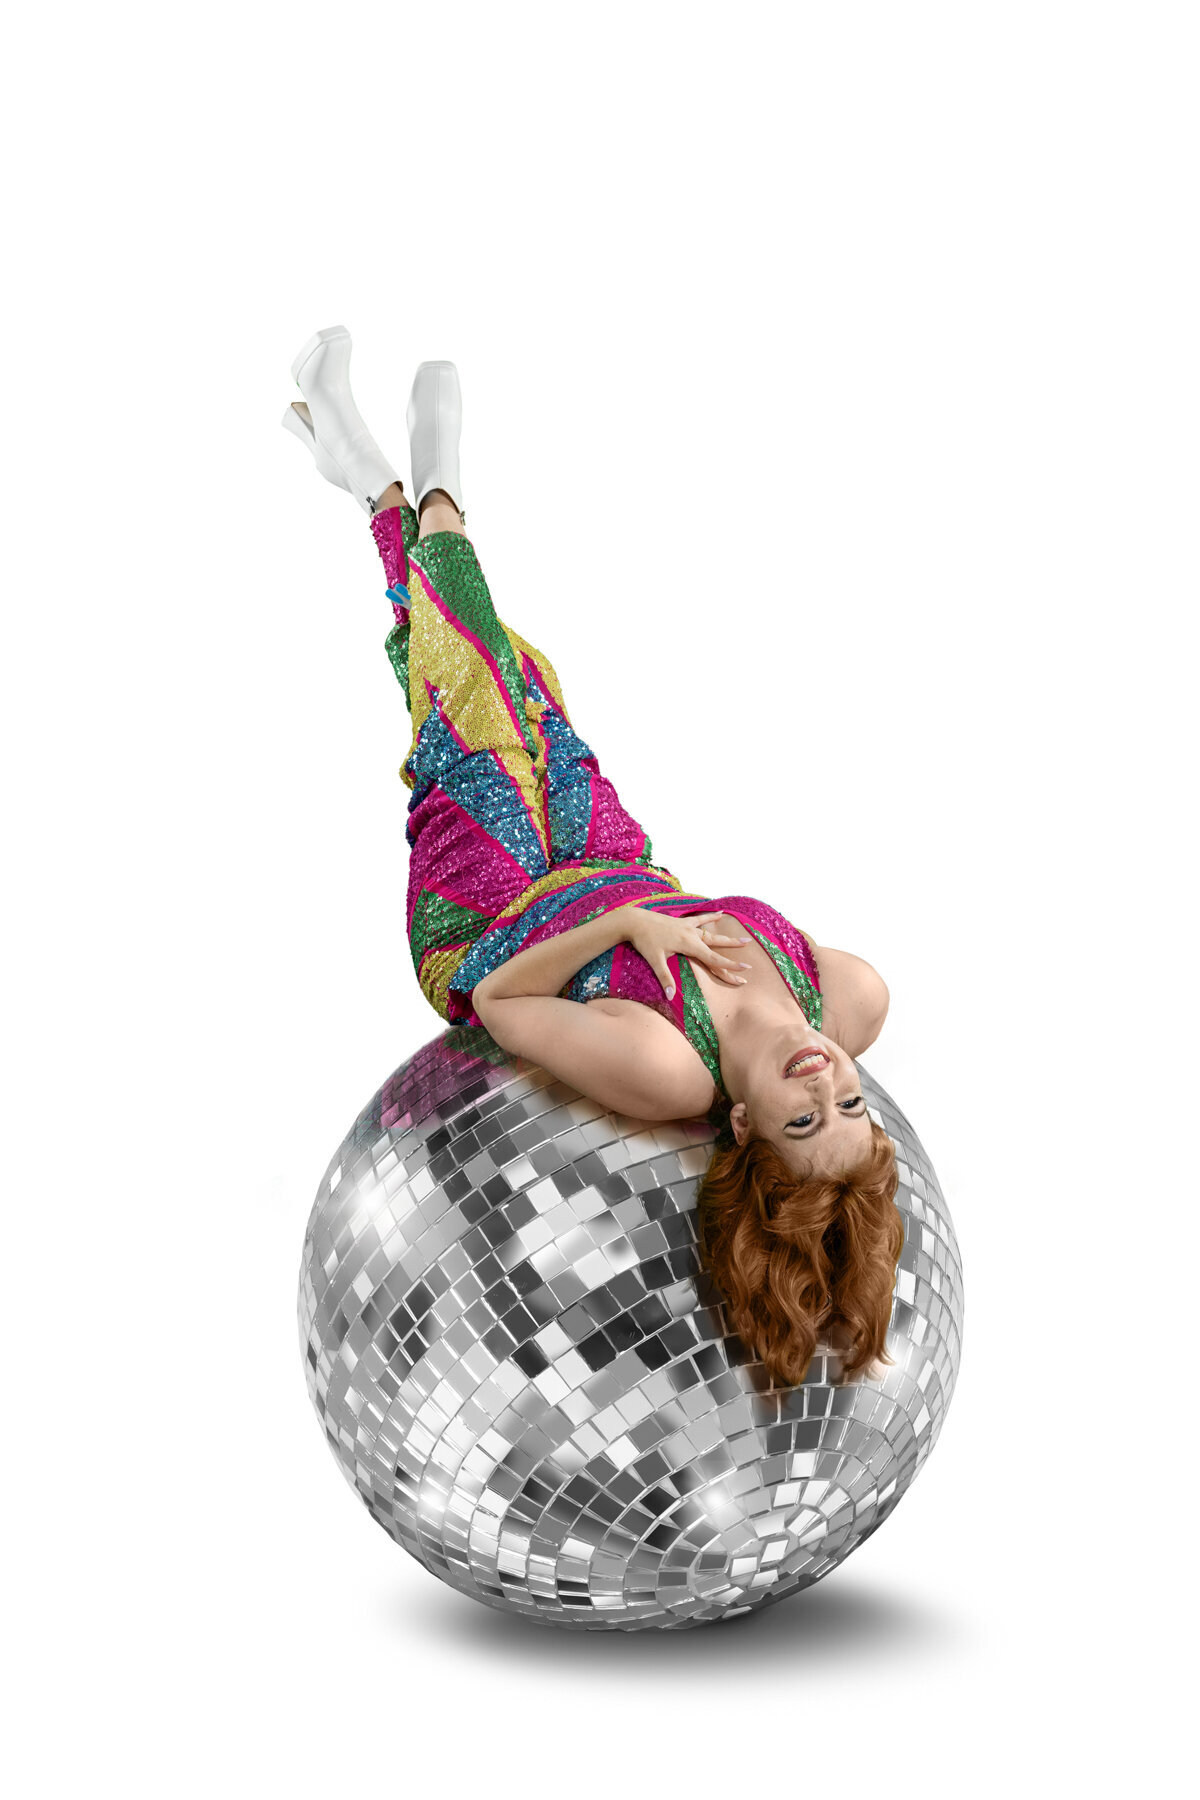 Minnetonka Minnesota high school photo of girl in sequin dress laying on disco ball in a studio